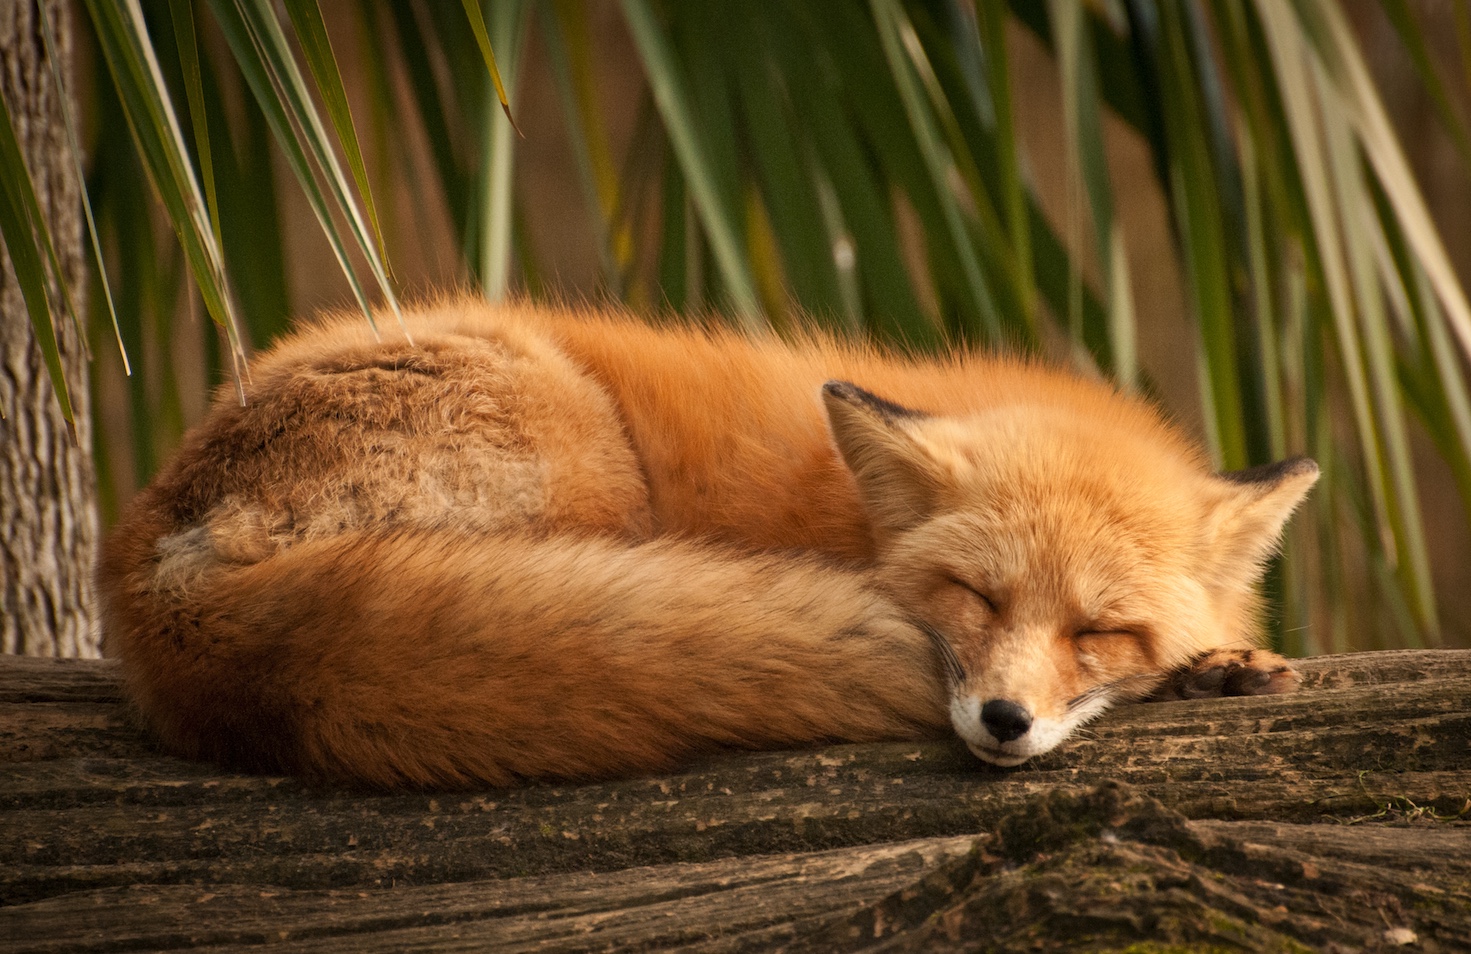 Sleeping red fox on a log.